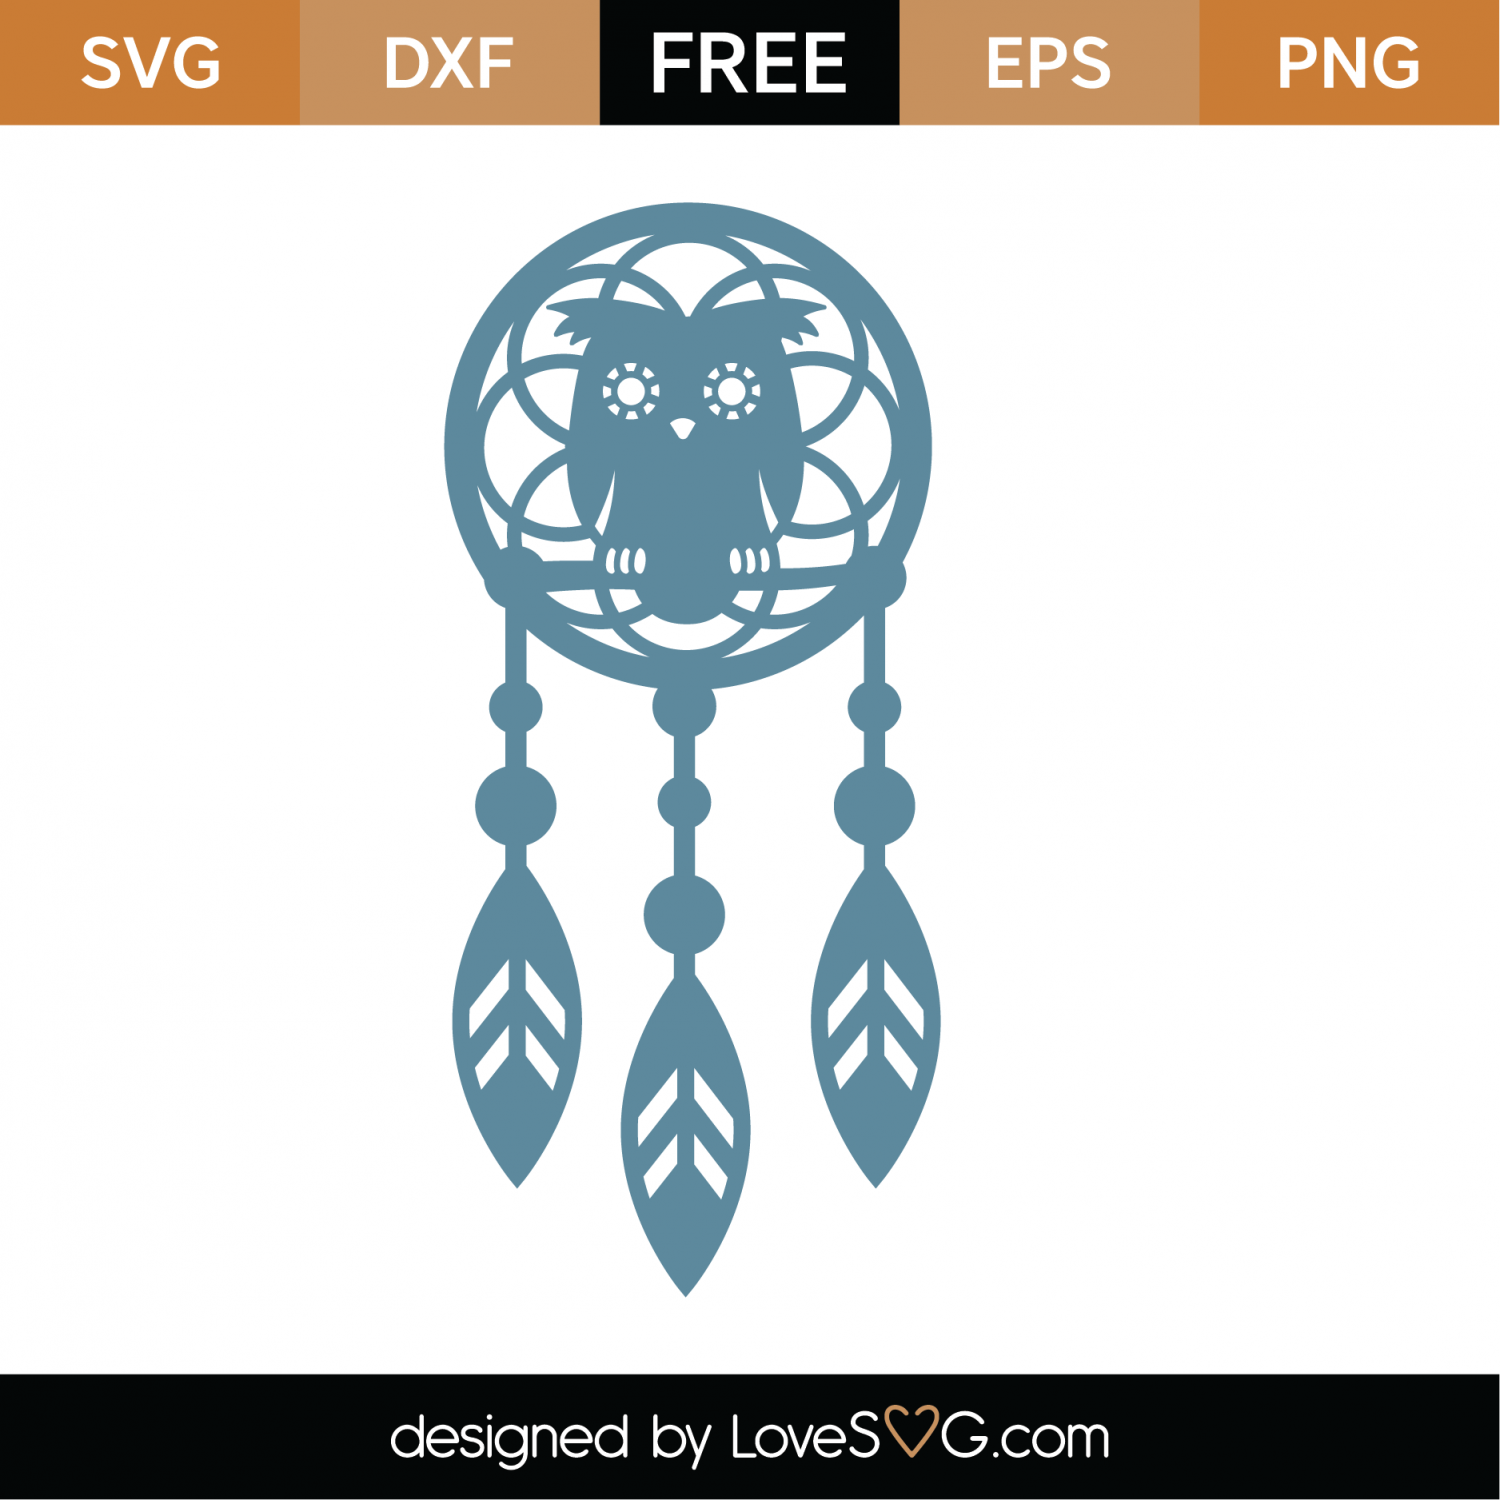 Download Free Dreamcatcher SVG Cut File | Lovesvg.com